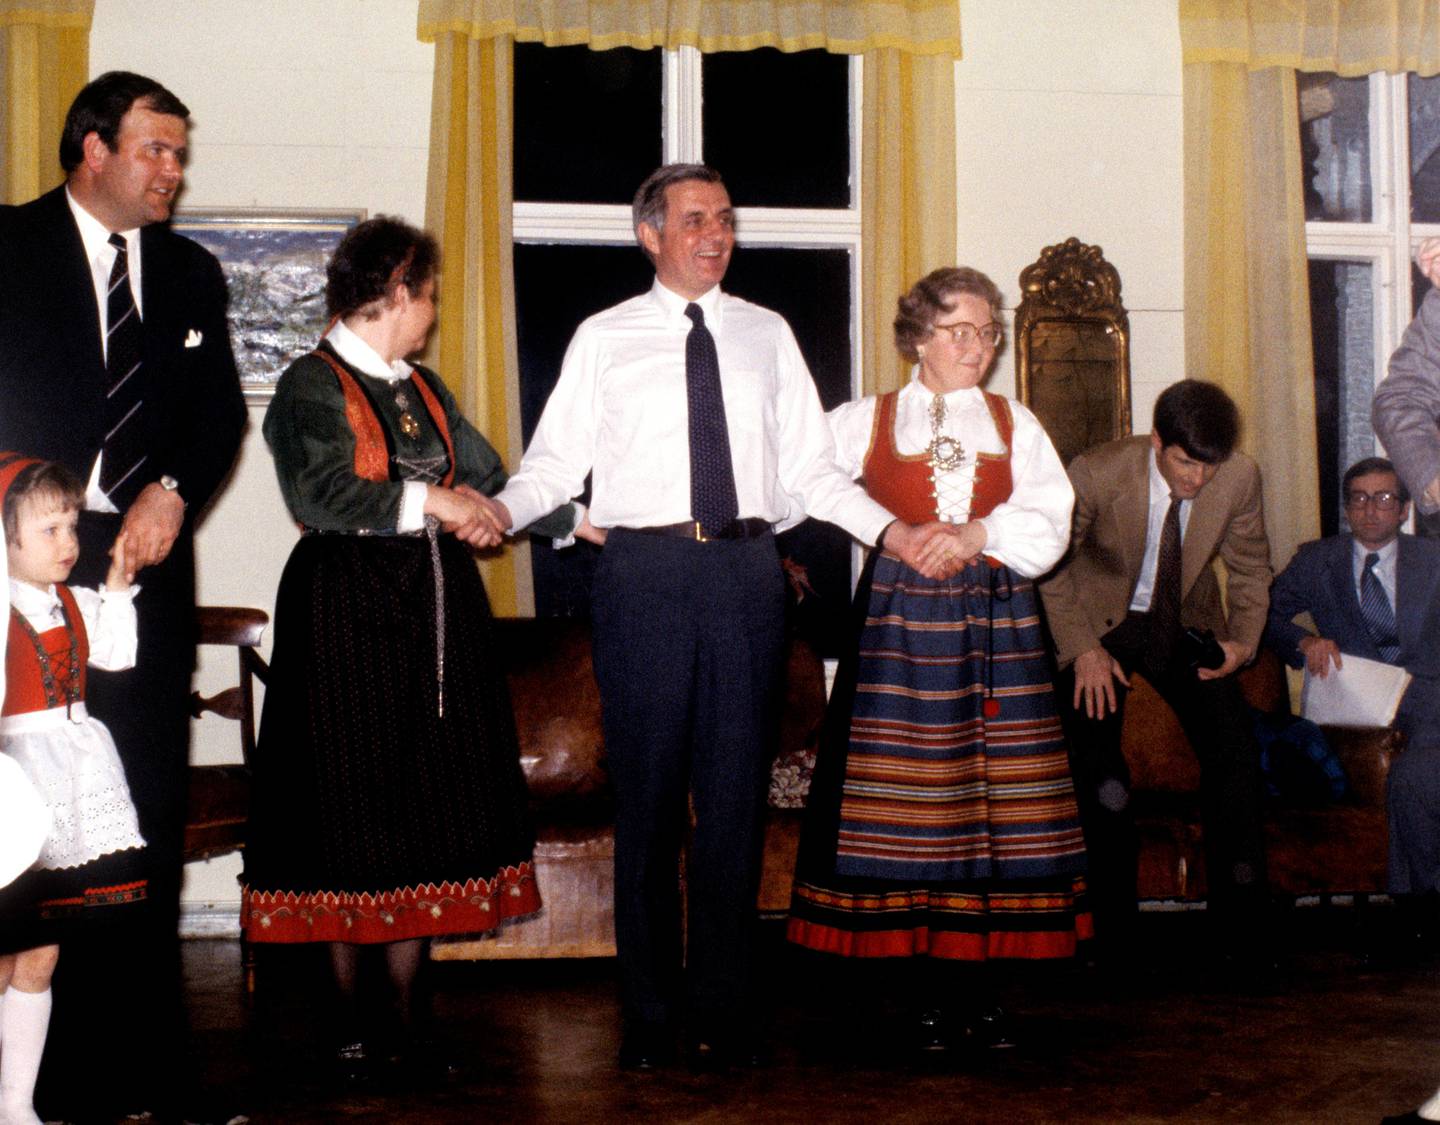 MUNDAL april 1979. Visepresident i USA Walter Mondale på besøk i Norge. Her får Mondale (midten) folkedansundervisning på Mundal Hotel.
Foto: NTB / NTB